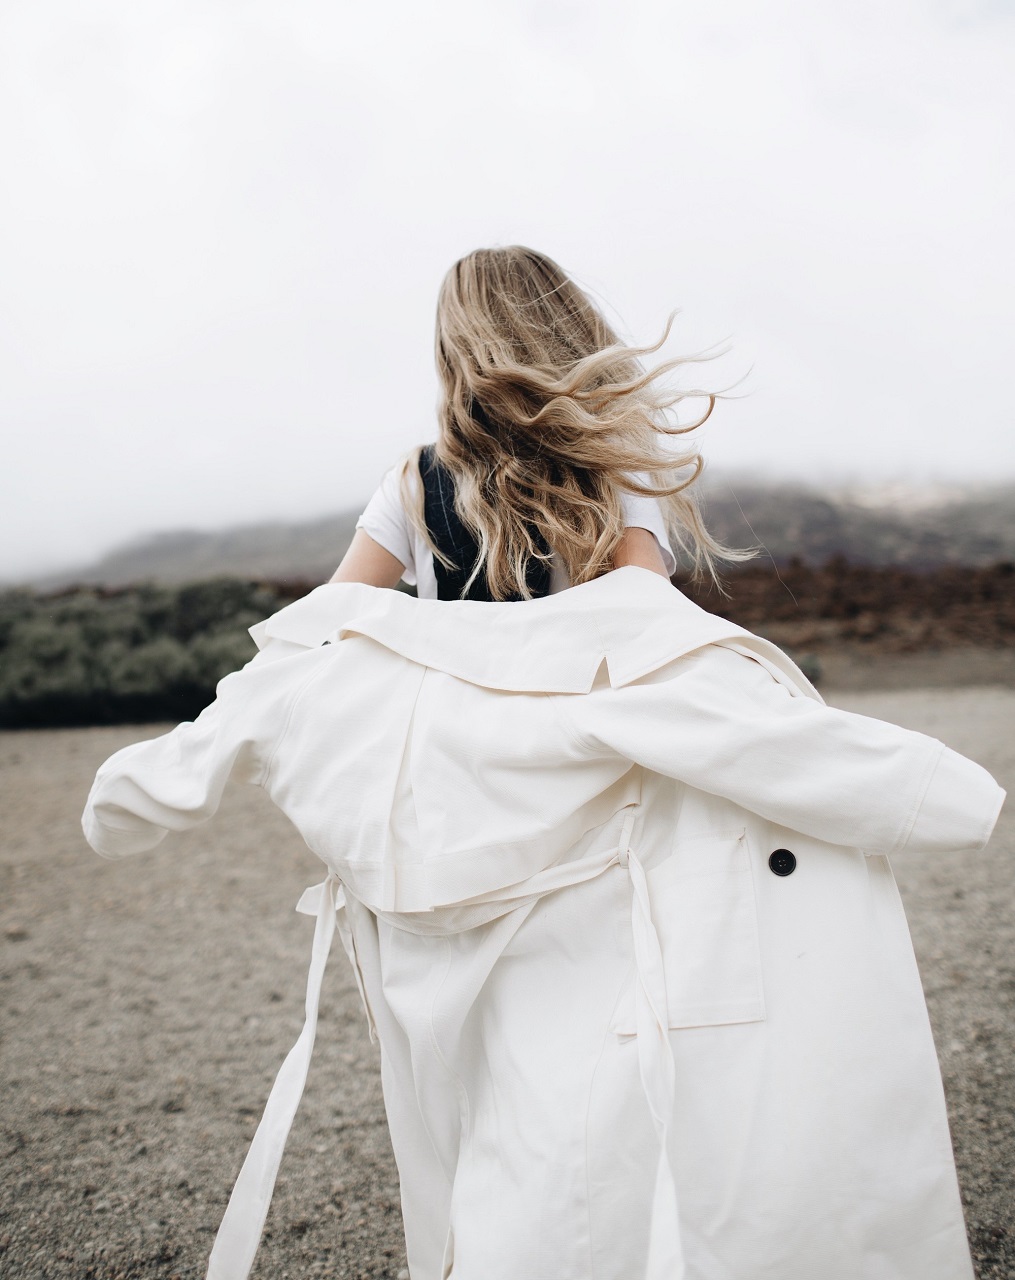 Women Long Hair Model White Coat Coats Windy Rear View 1015x1280